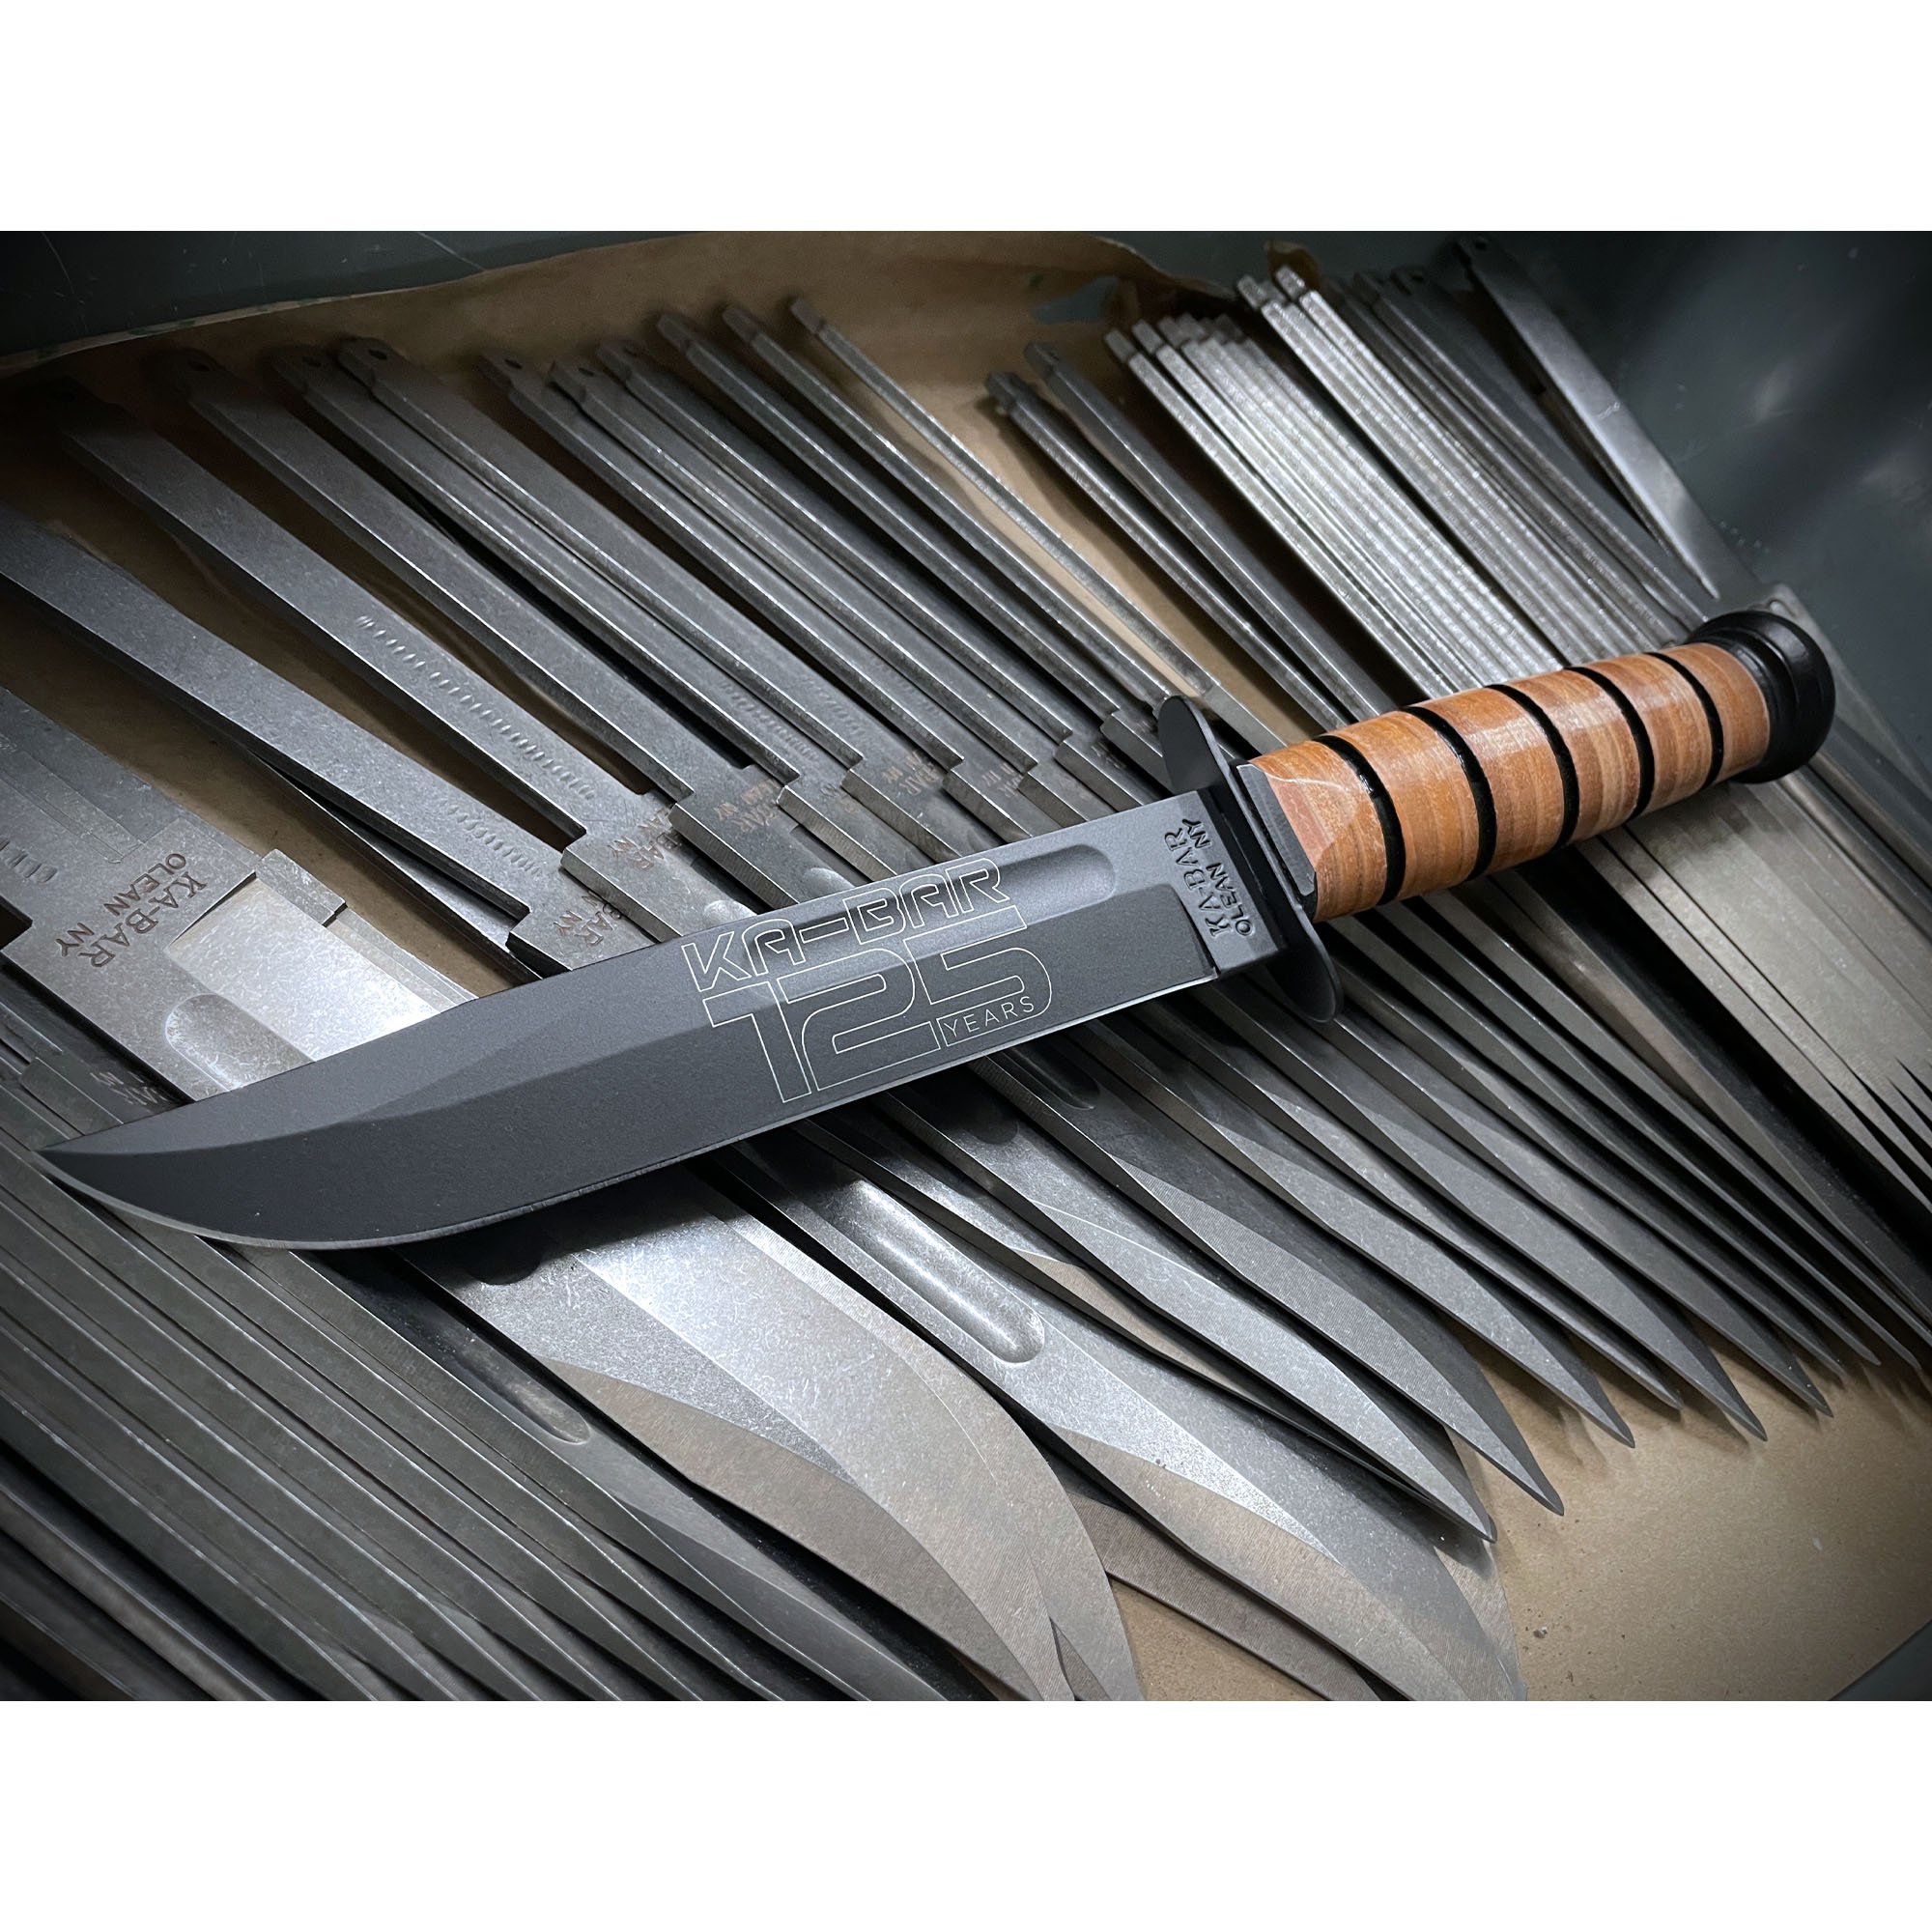 KA-BAR USN 125th Anniversary Knife